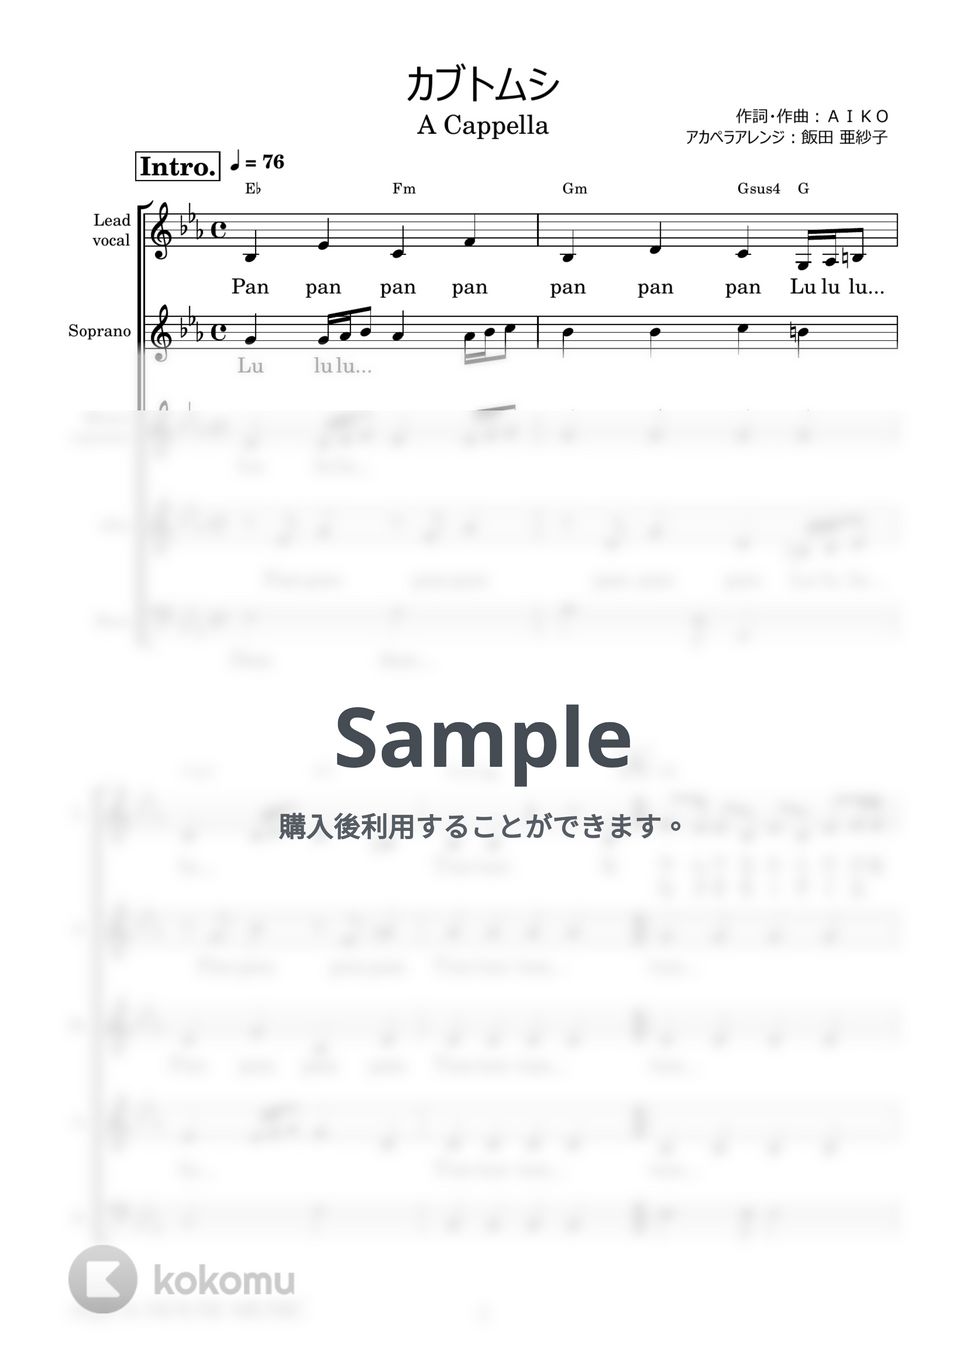 aiko - カブトムシ (アカペラ楽譜♪５声ボイパなし) by 飯田 亜紗子